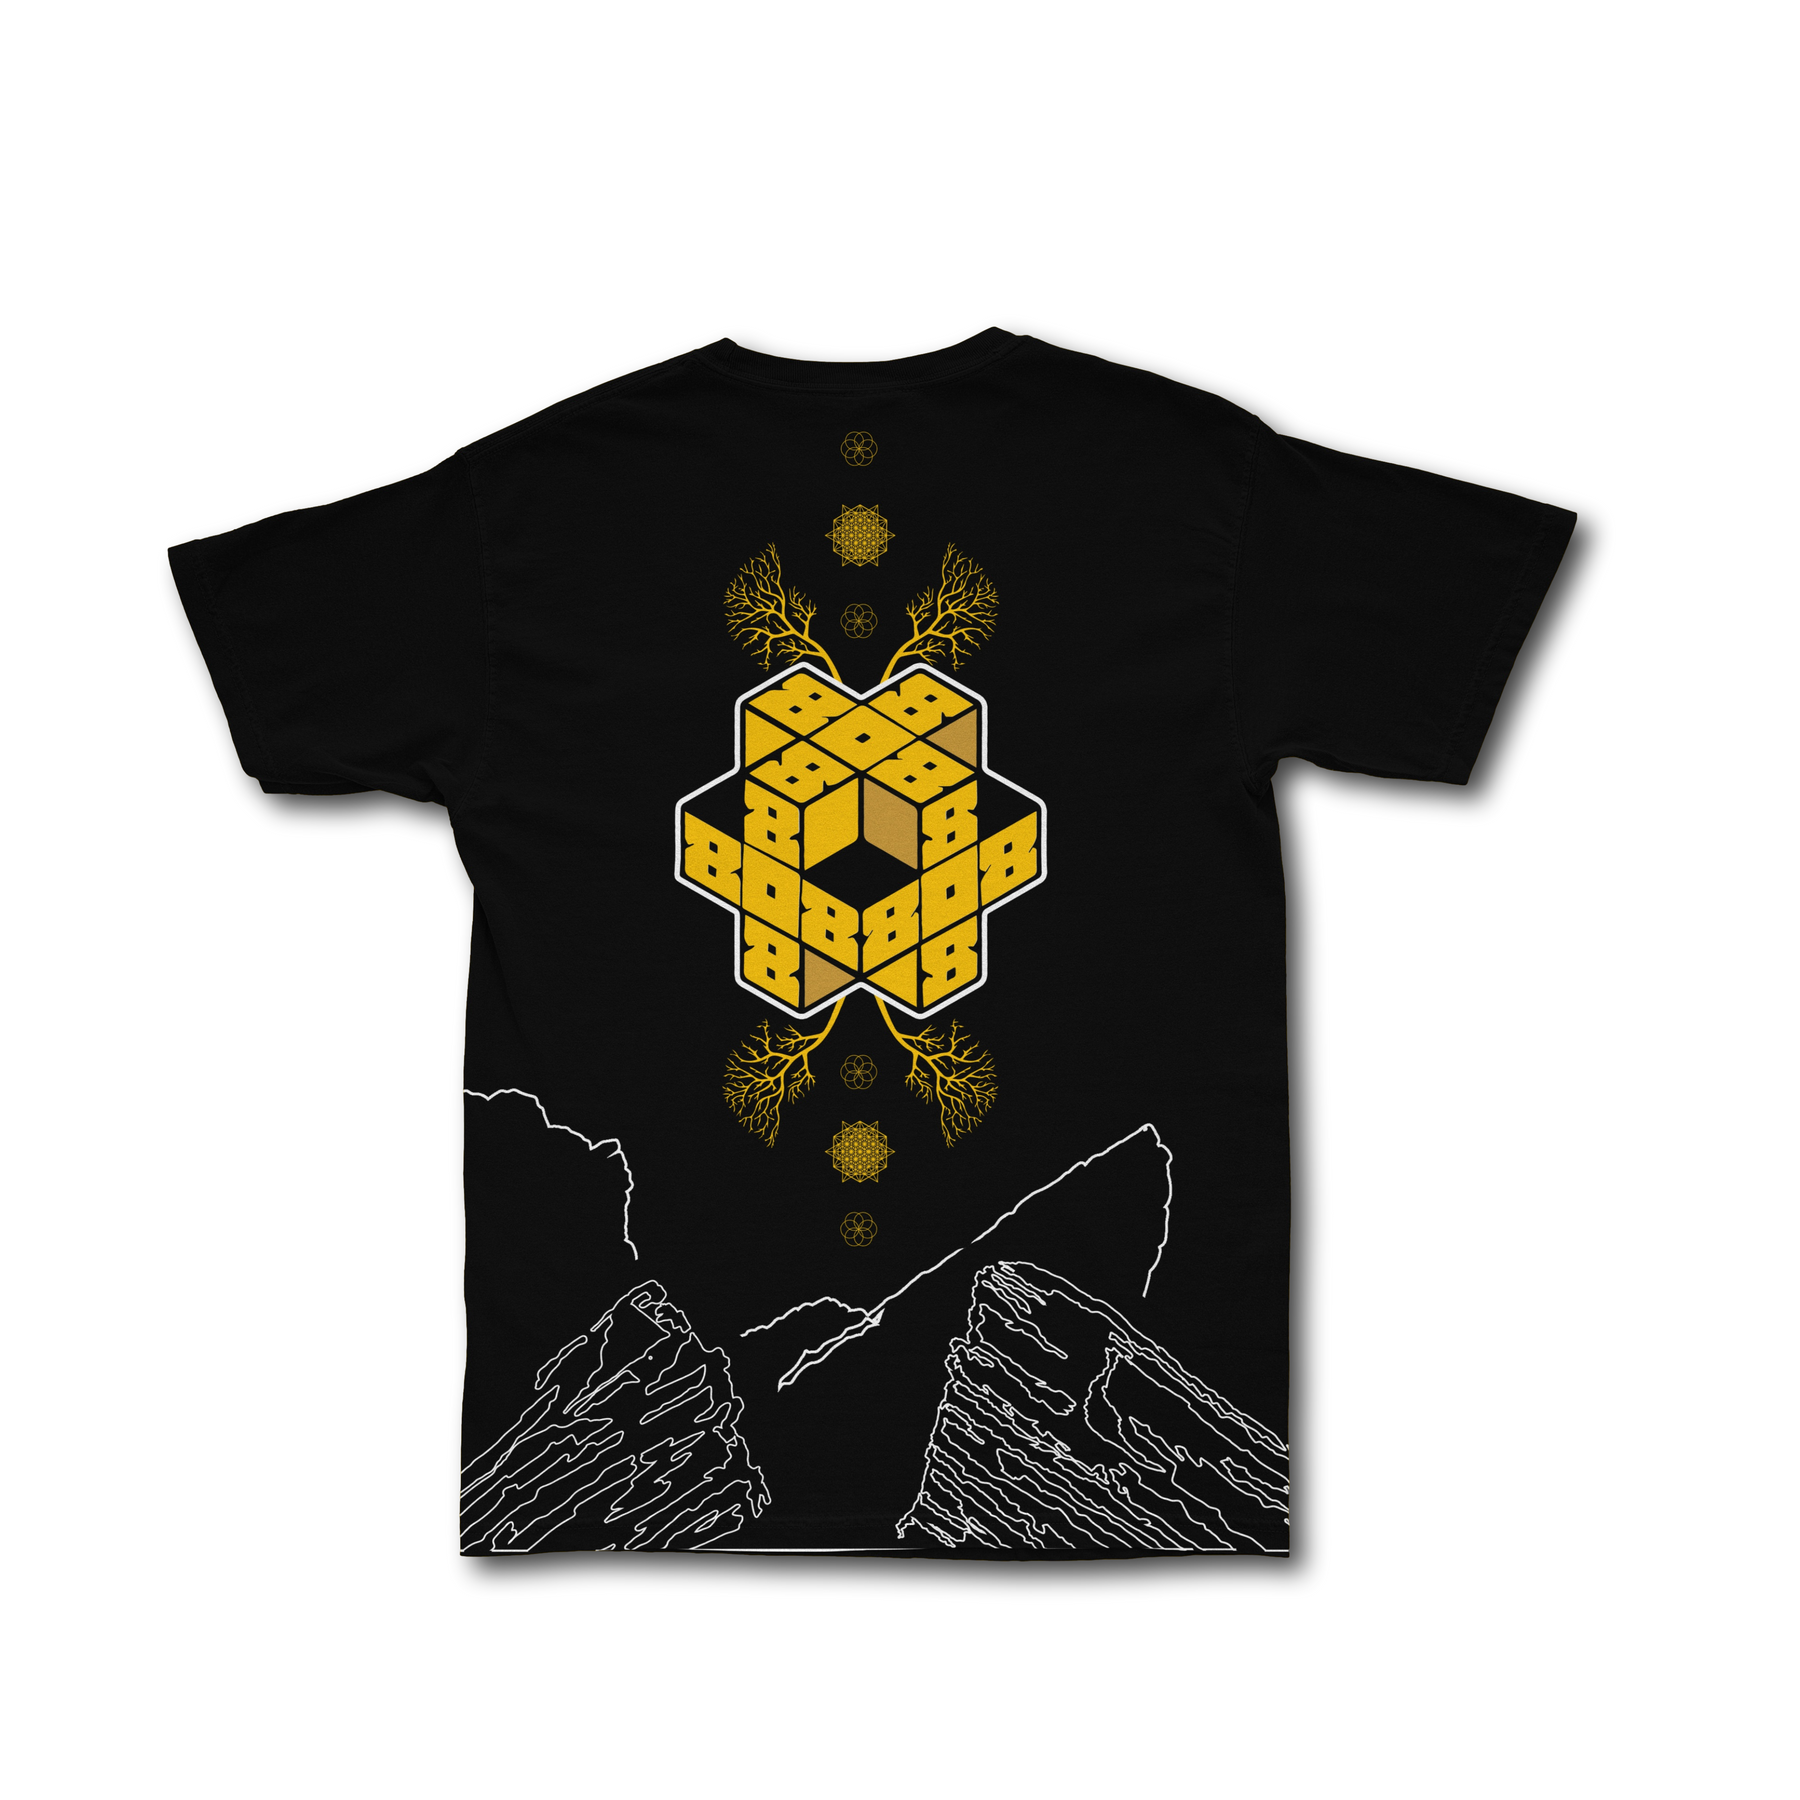 Elev808 Black + Gold Topo T-Shirt (pre-sale)